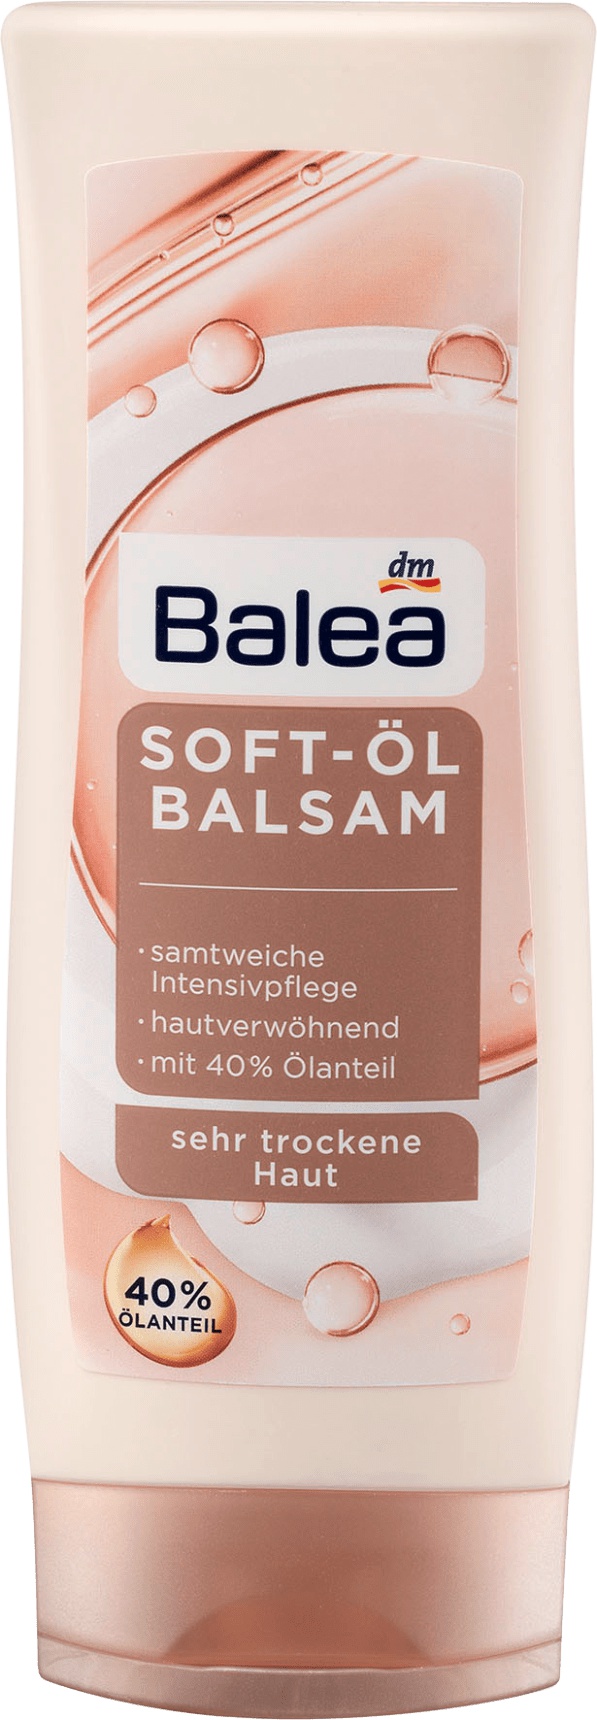 Balea Soft-Öl Balsam